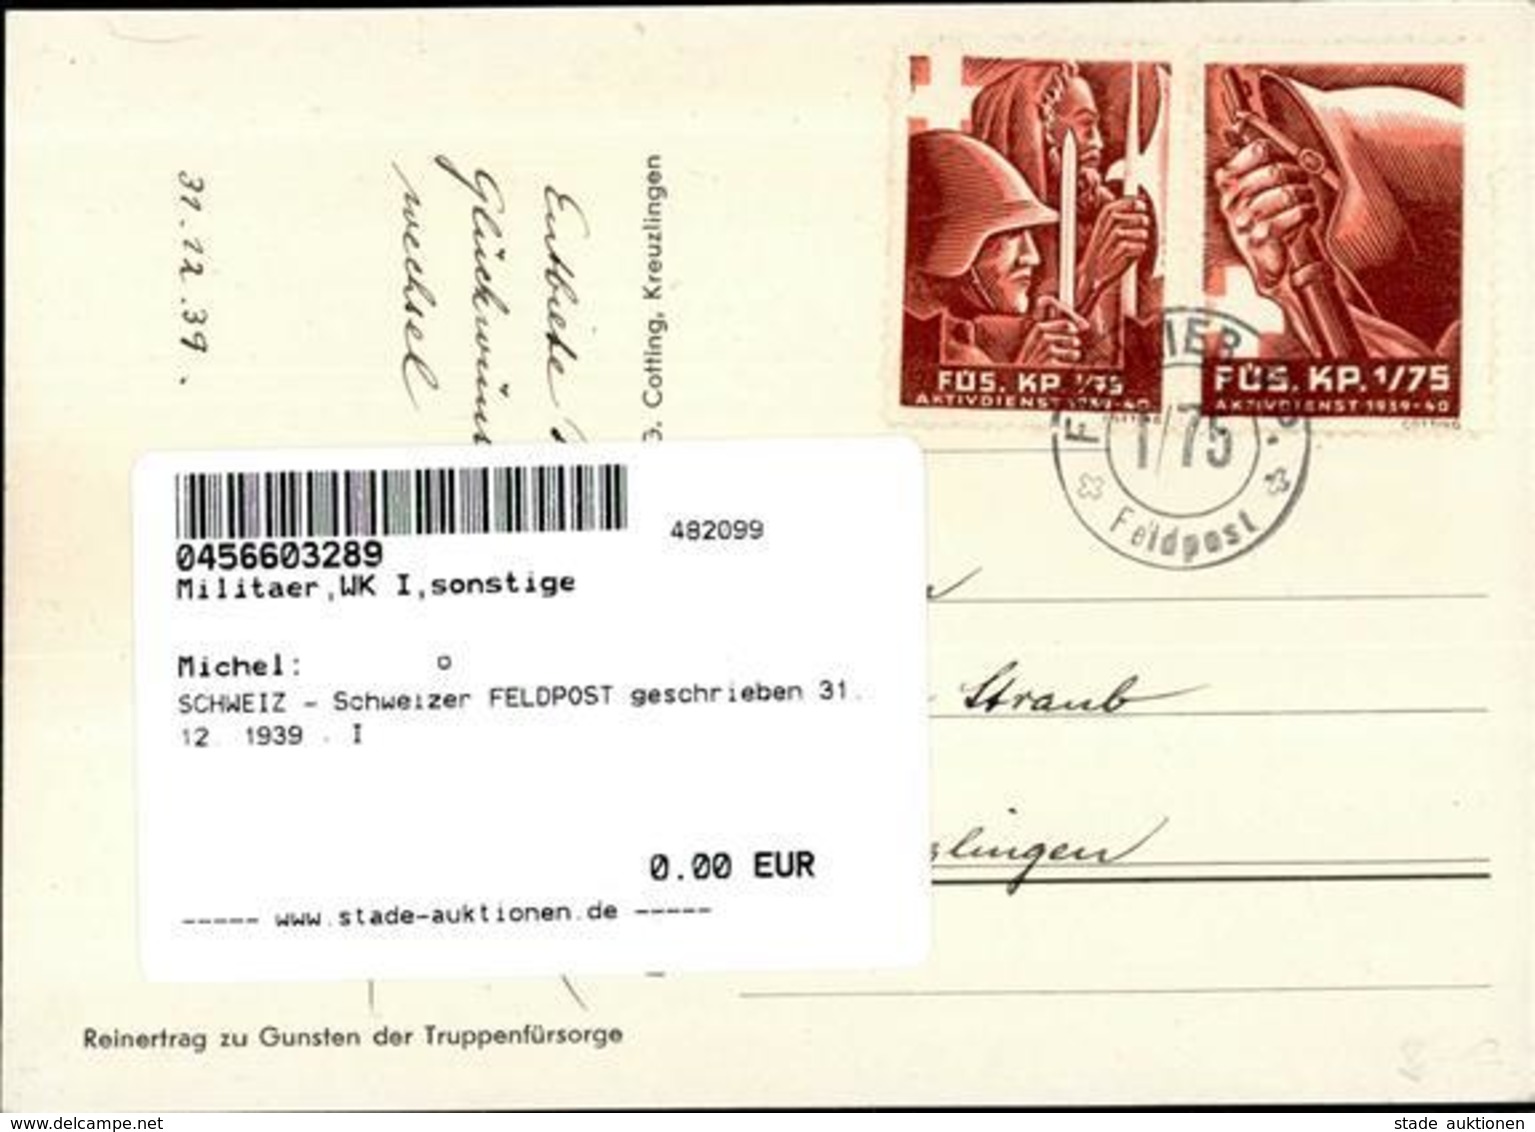 SCHWEIZ - Schweizer FELDPOST Geschrieben 31.12. 1939 , I - Weltkrieg 1914-18